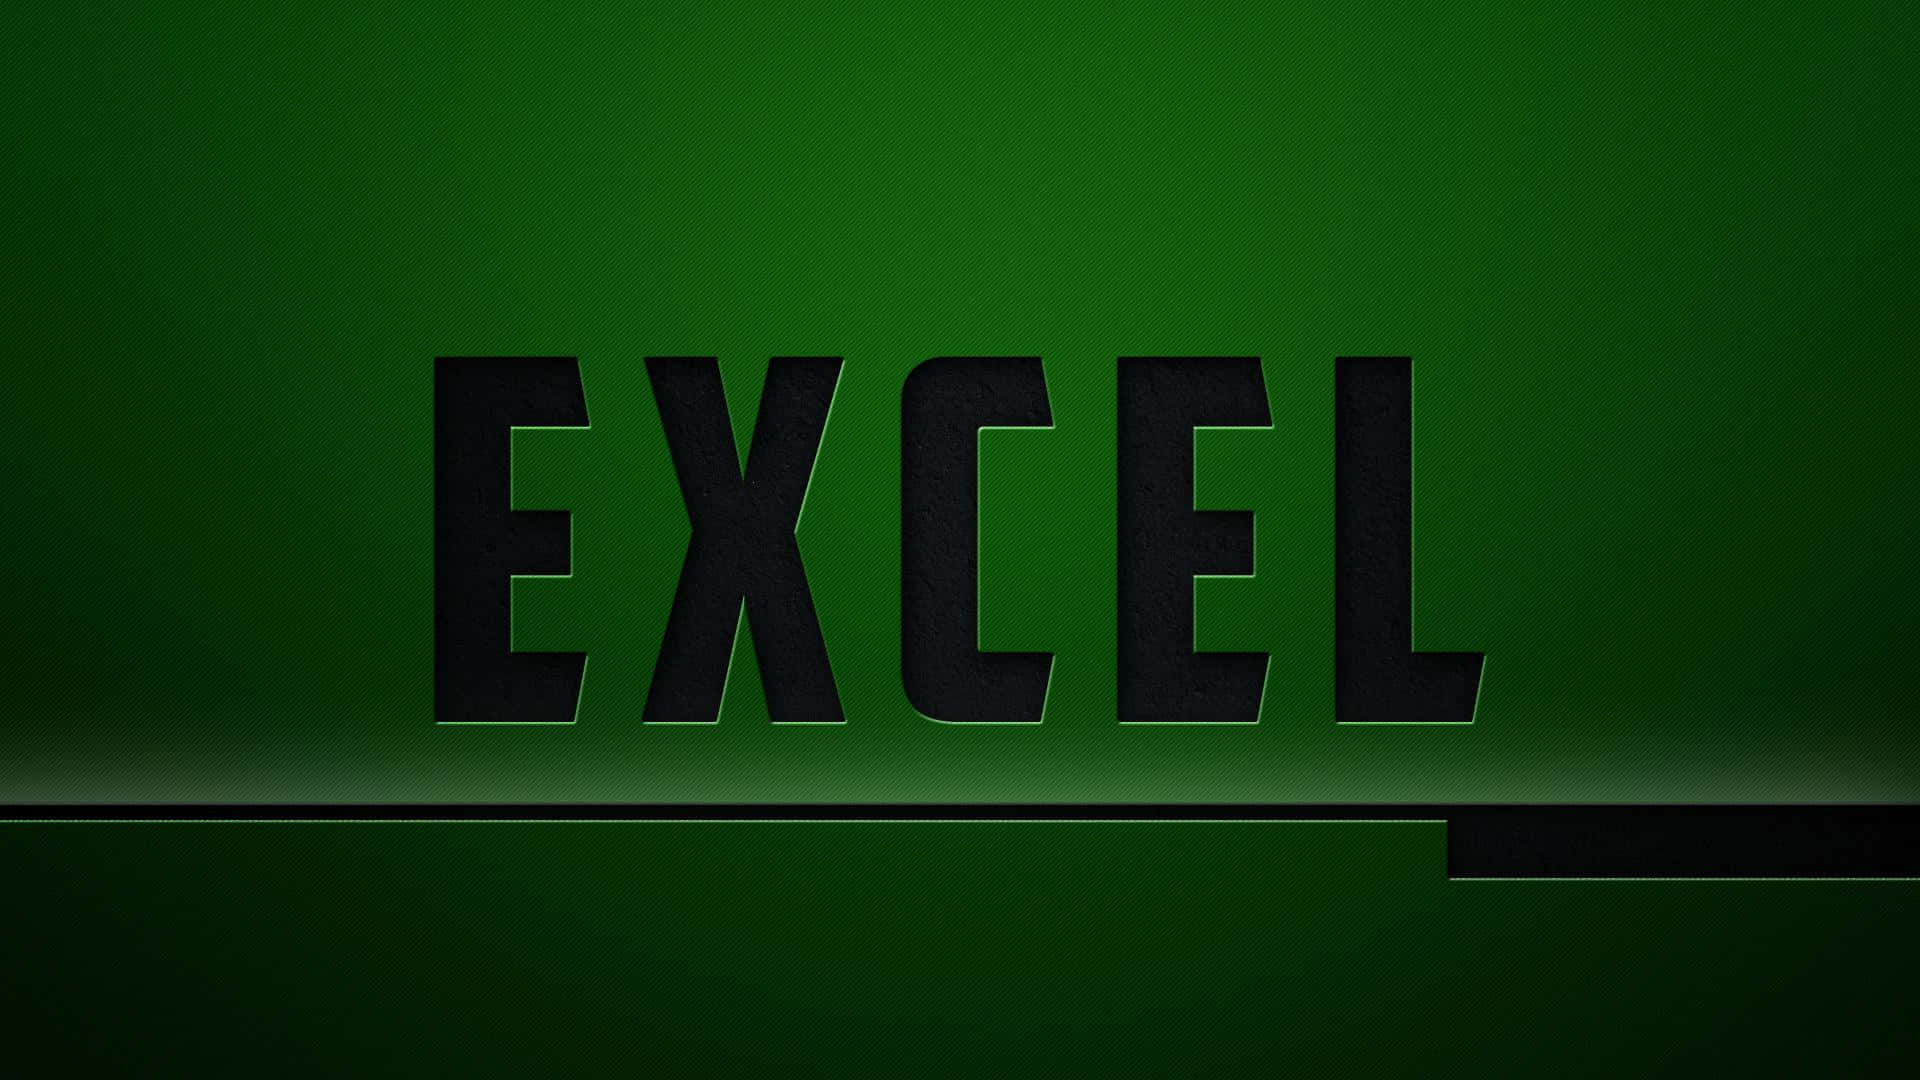 Excel - Wallpapers - Hd